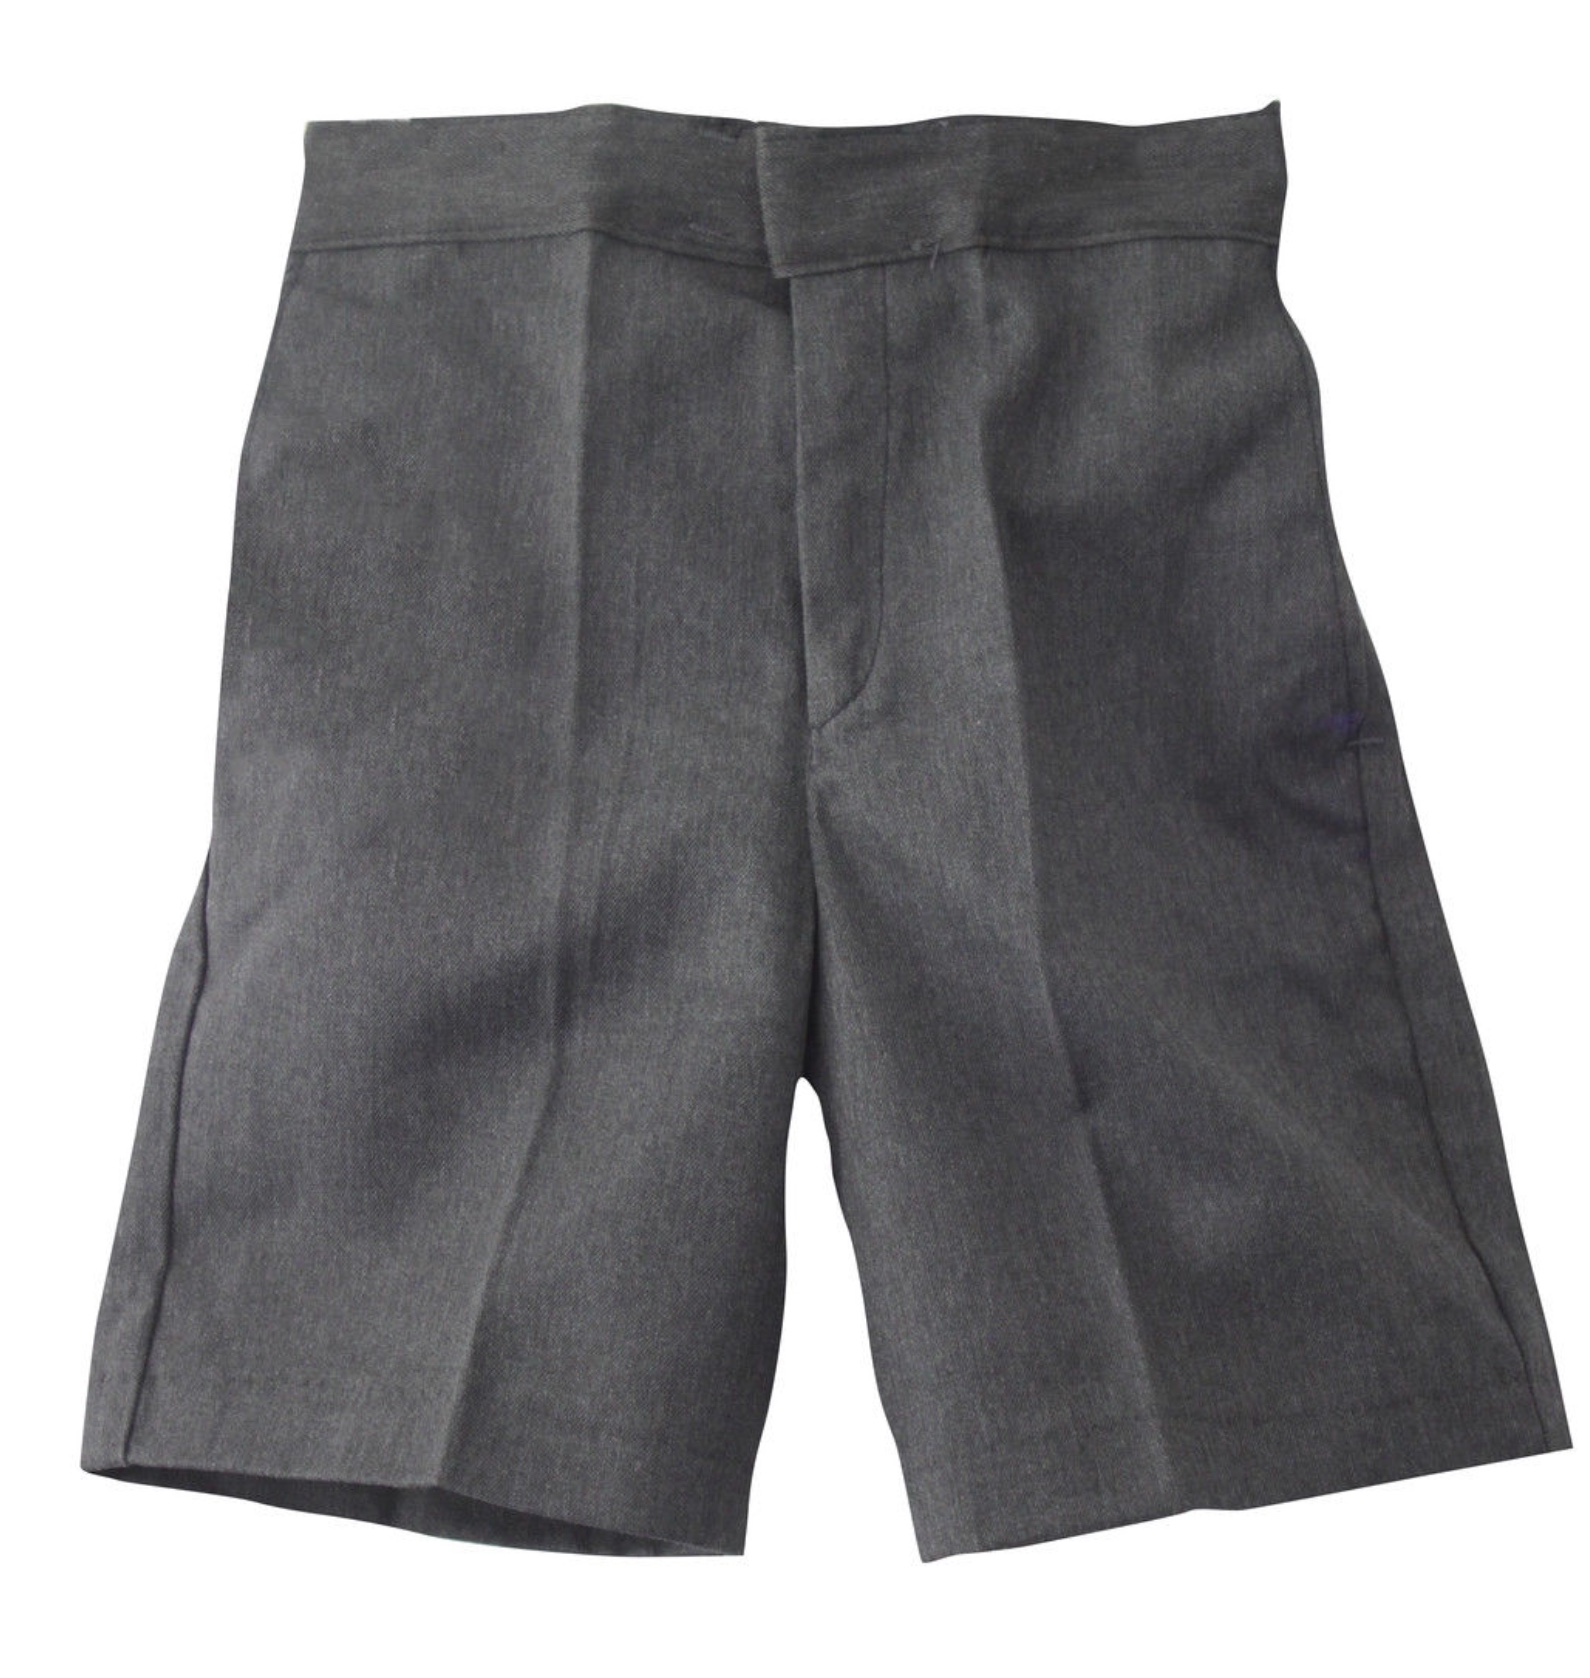 Boys' Dark Grey Shorts, Flat Front, Adjustable Waist, Zip Fly, Side and Back Pockets 5-6 Y